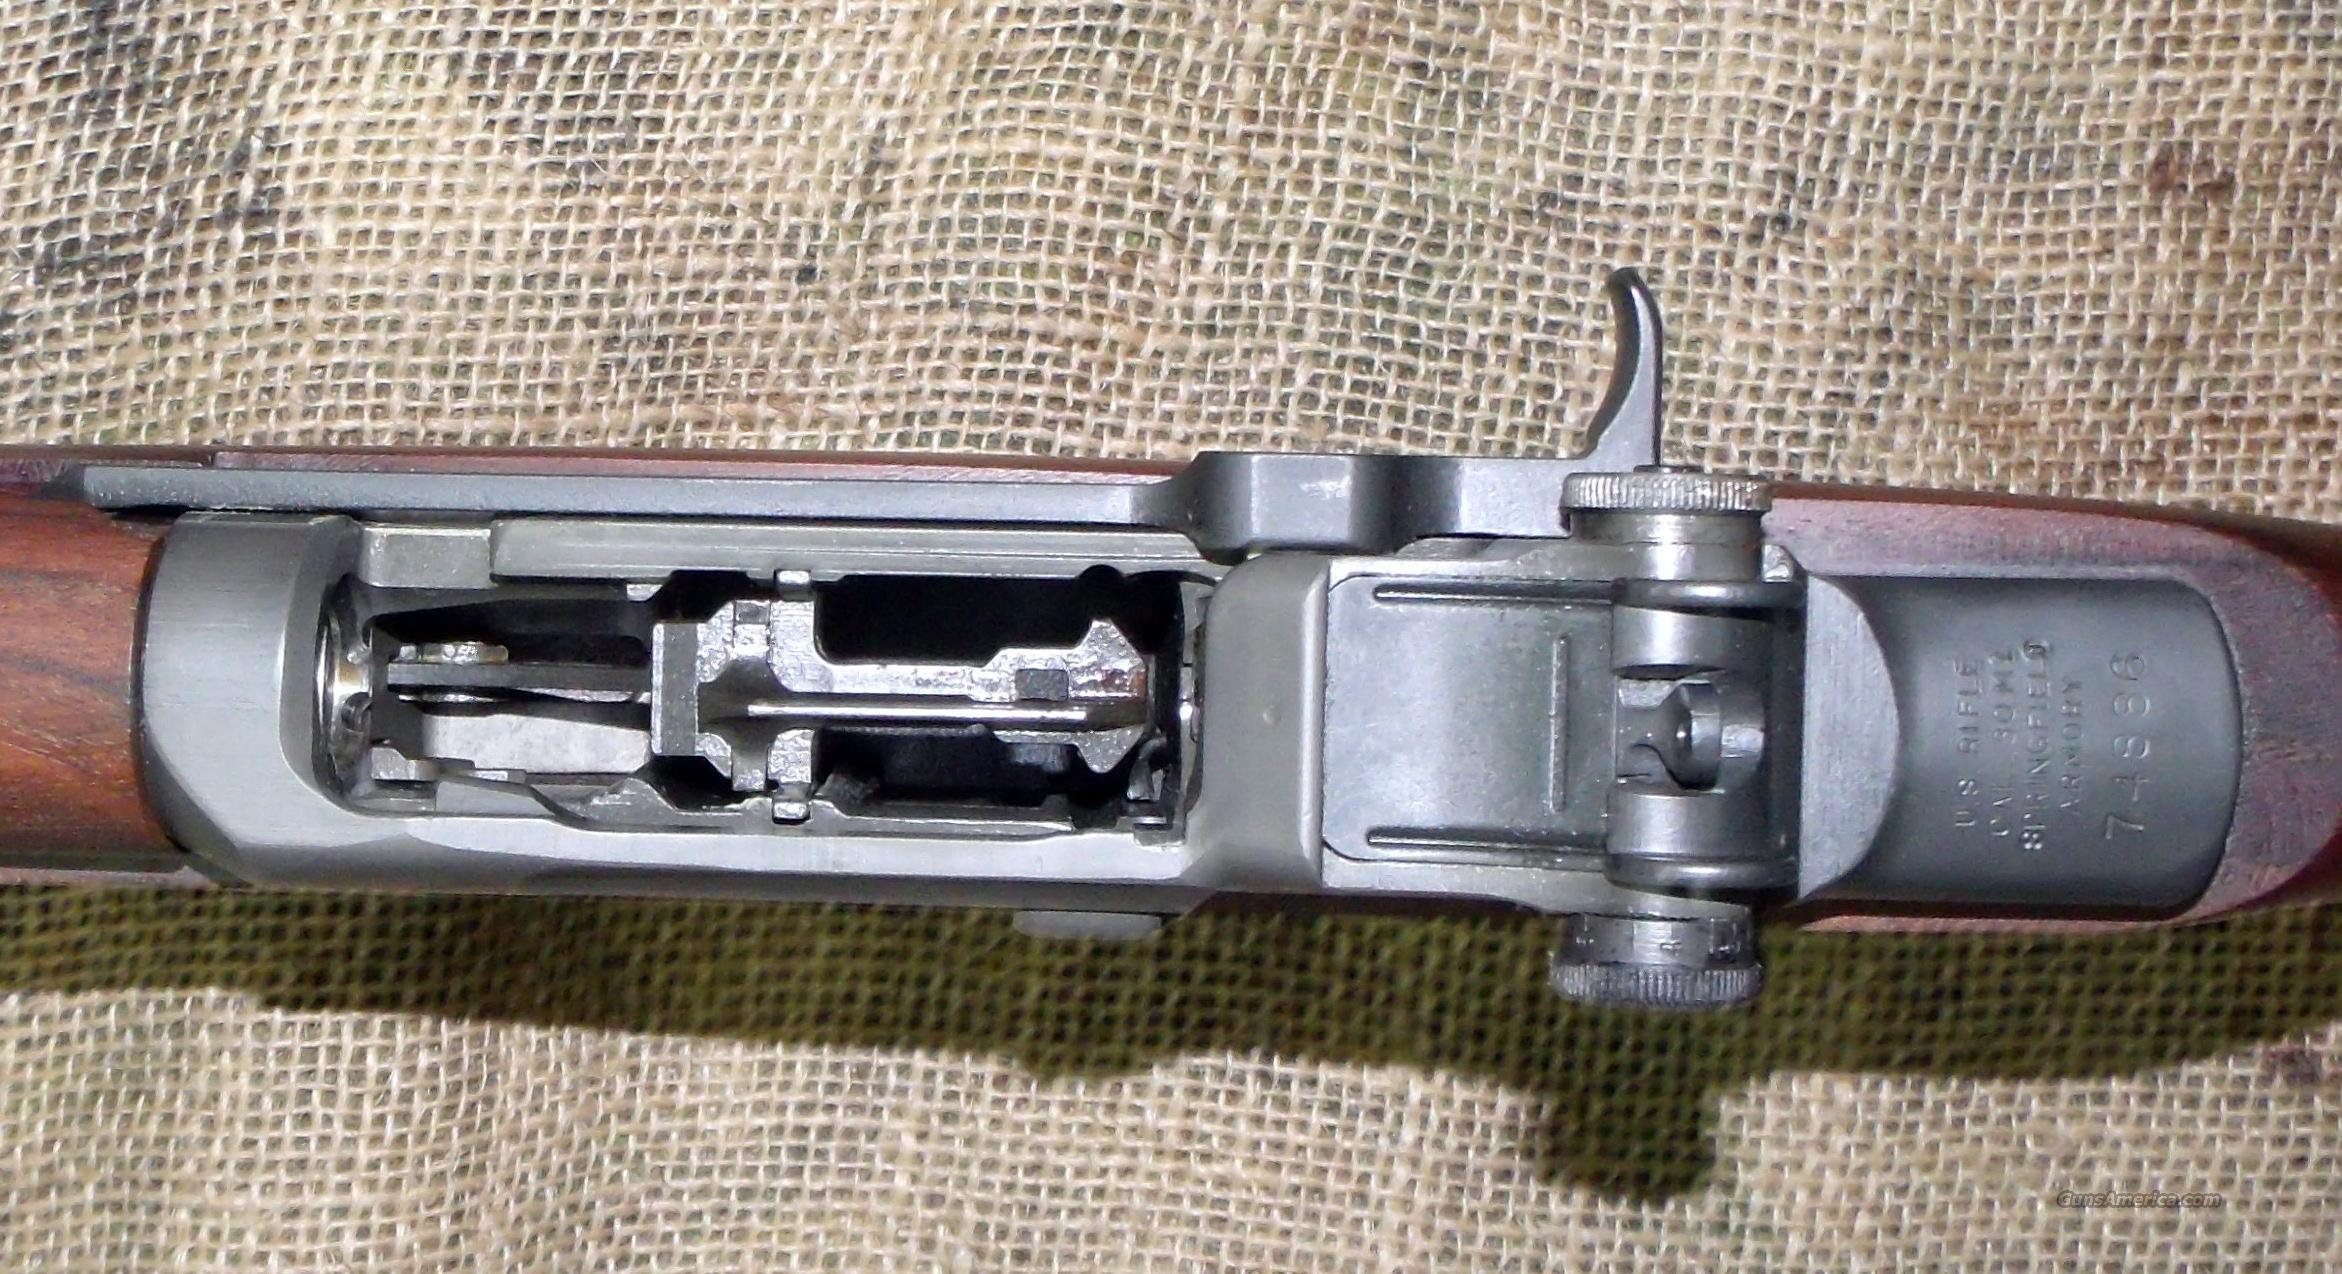 fulton m1 carbine for sale